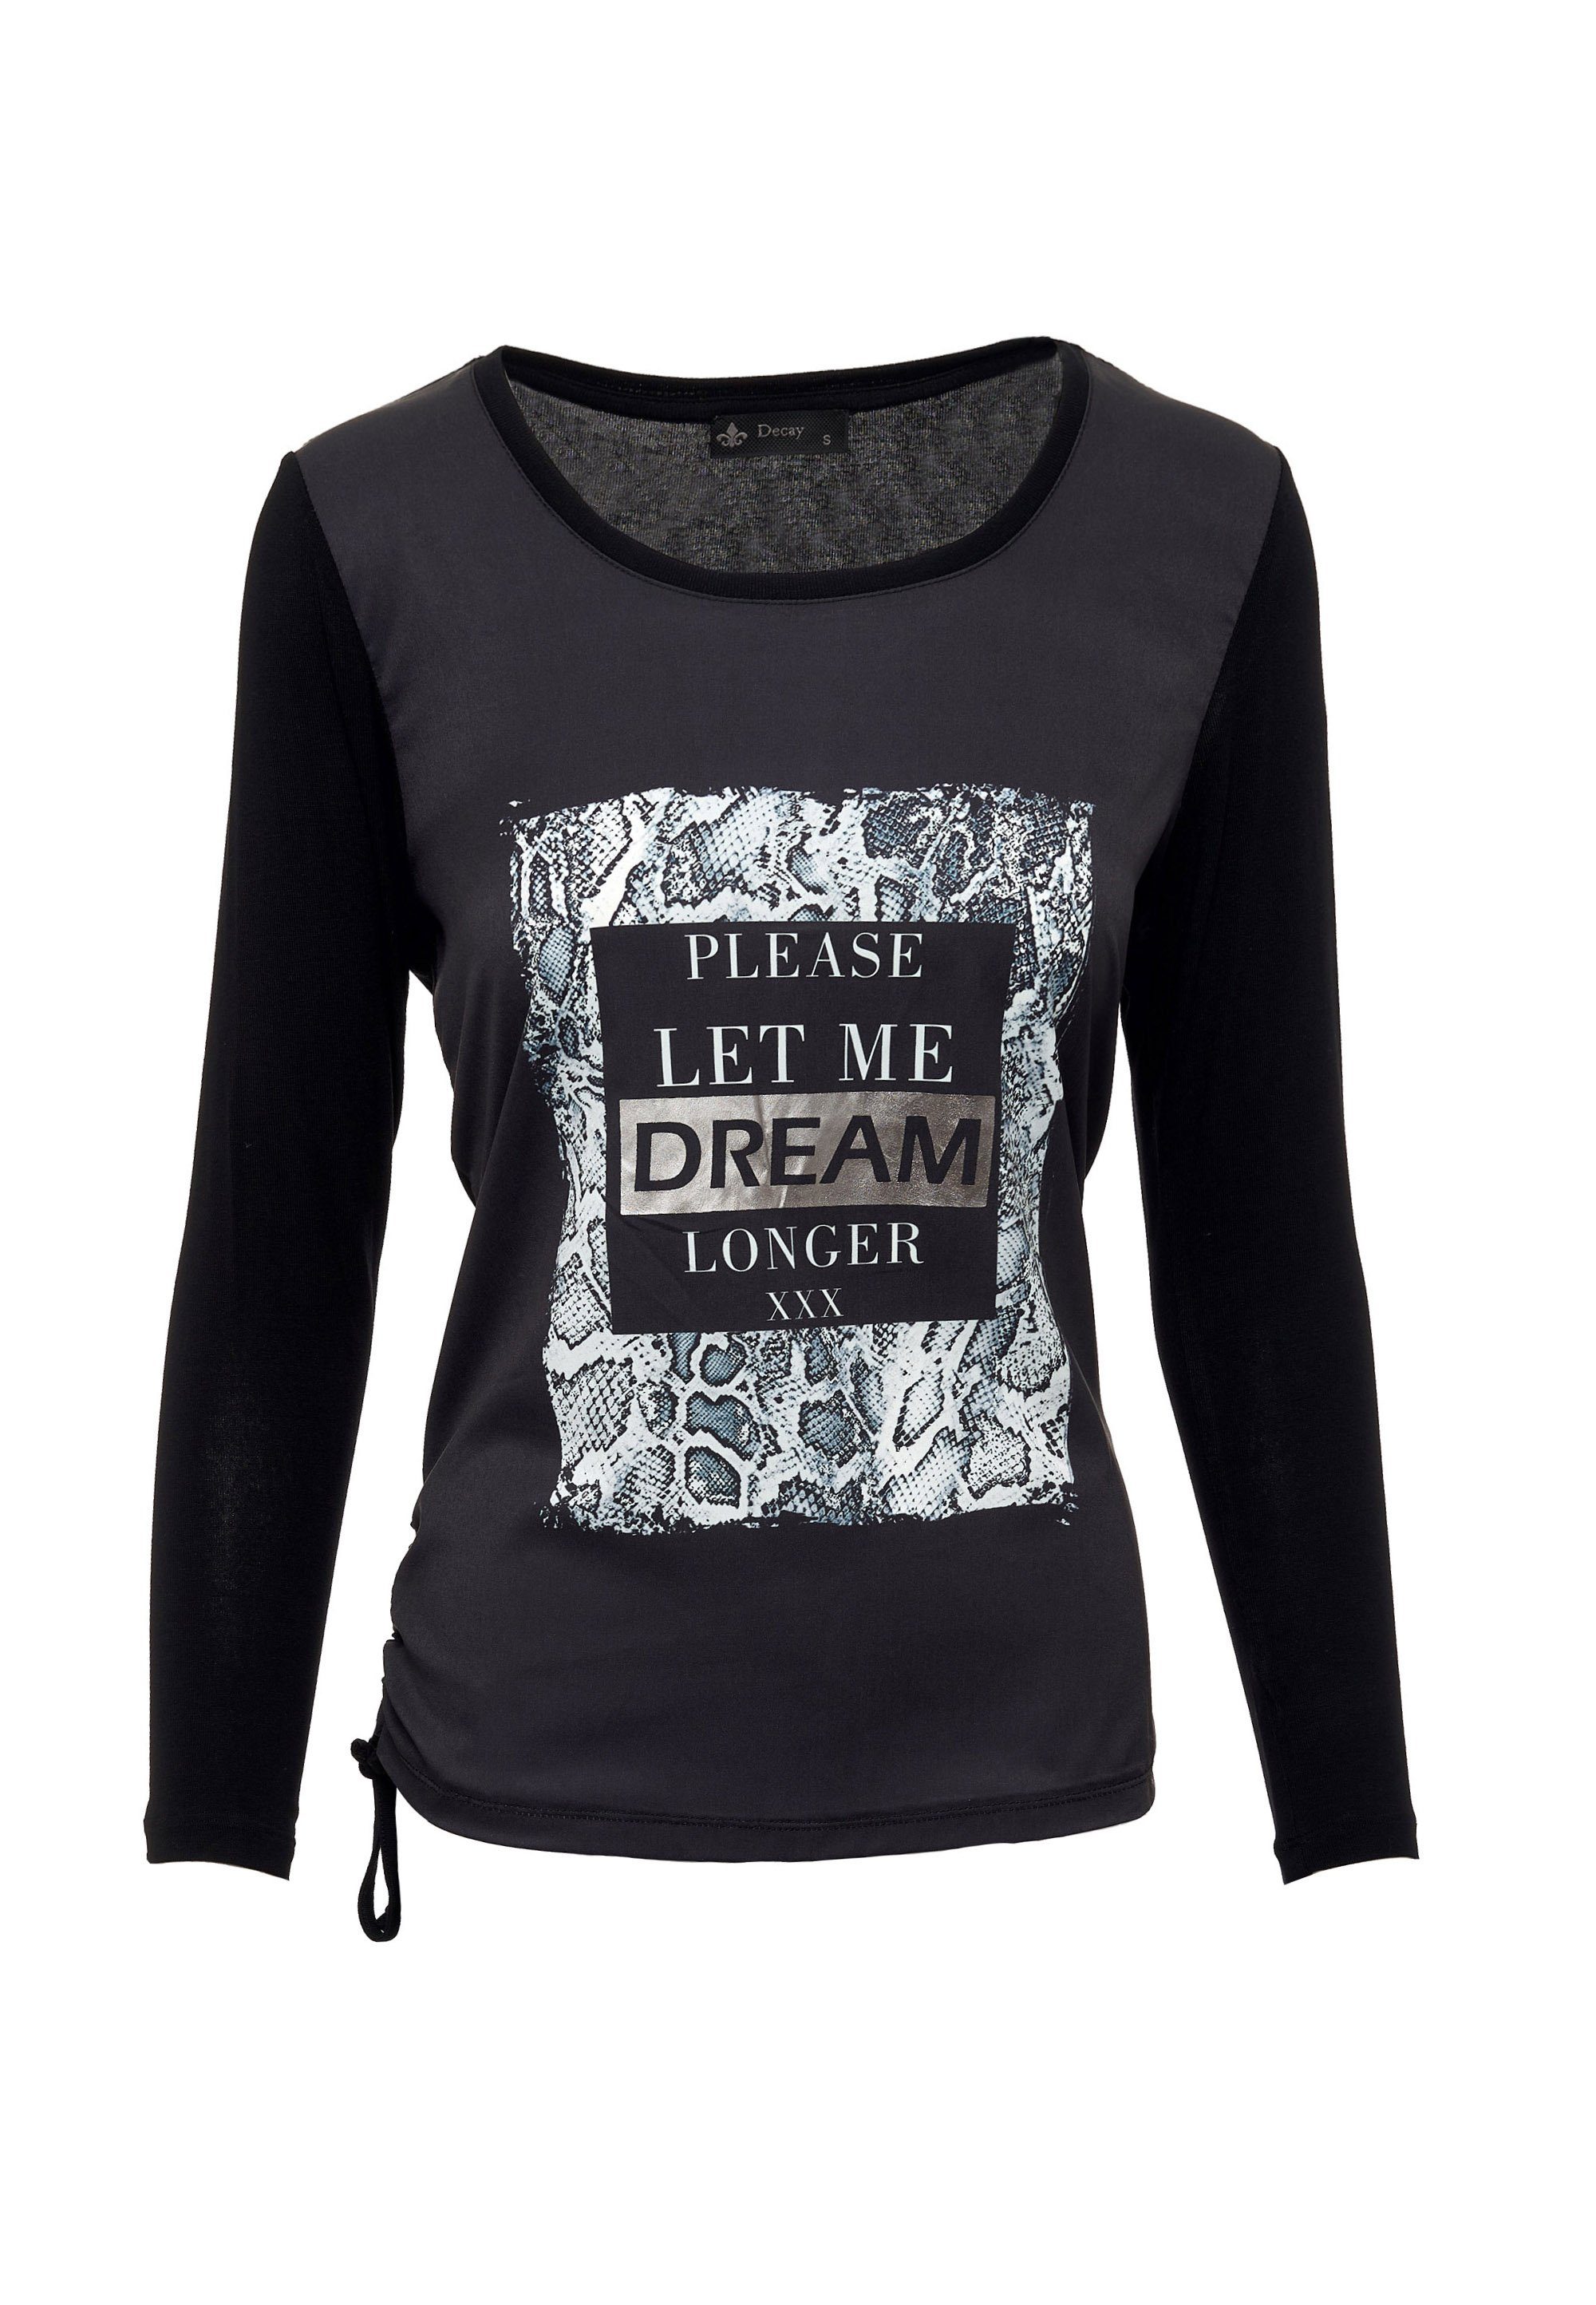 Decay Langarmshirt mit Metallic-Effekt trendigem schwarz